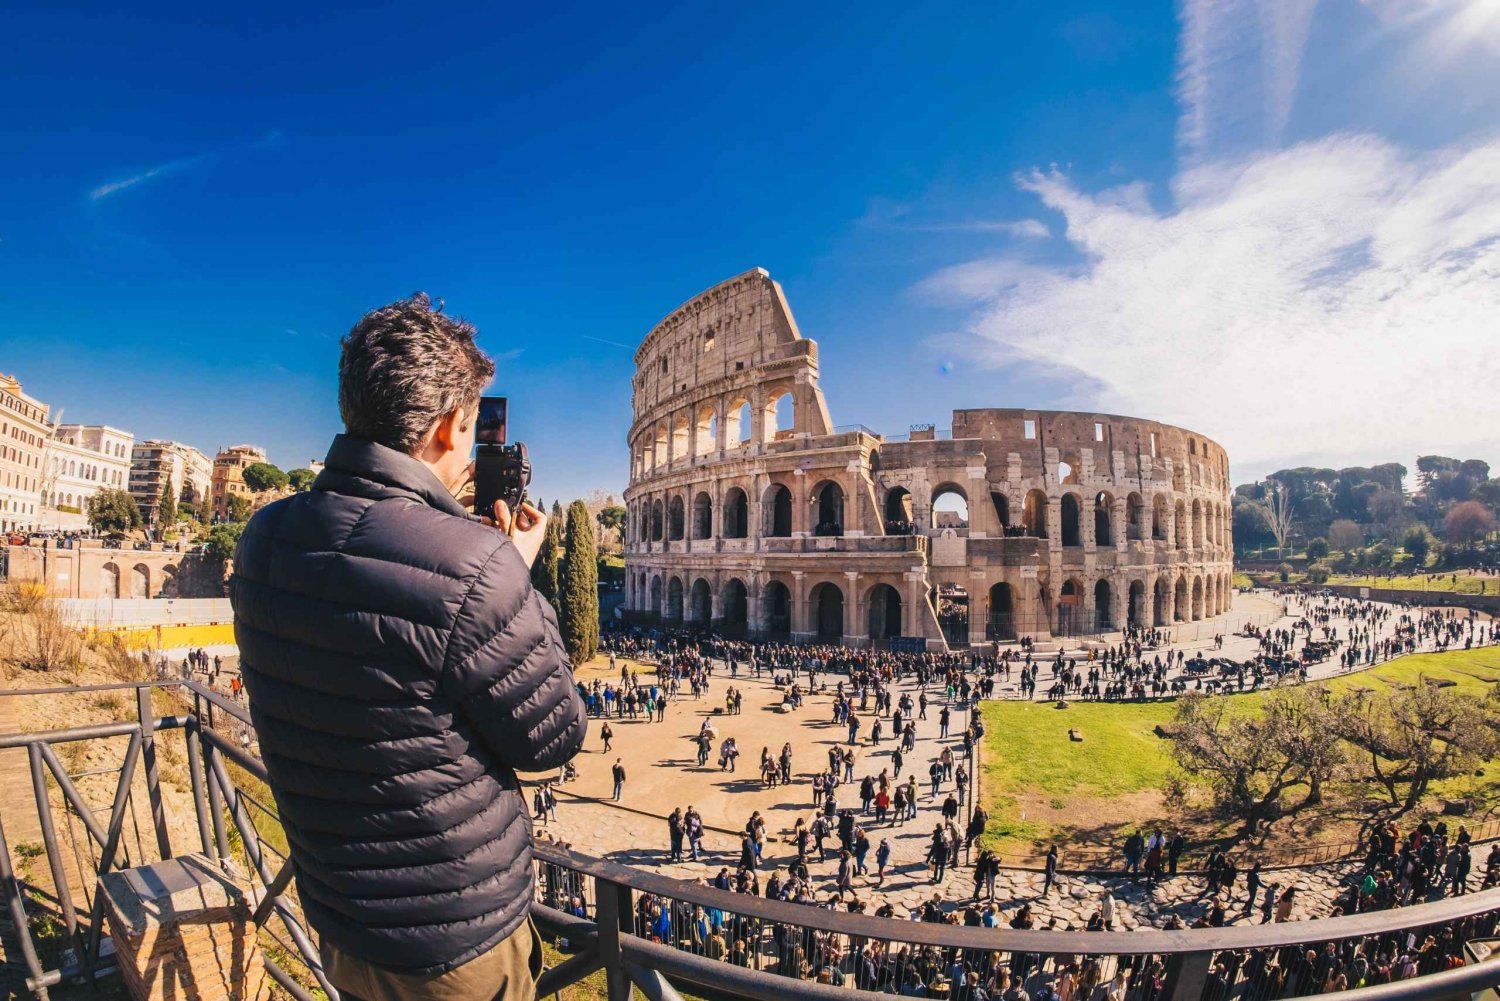 Express Entry: Colosseum, Roman Forum & Palatine Hill